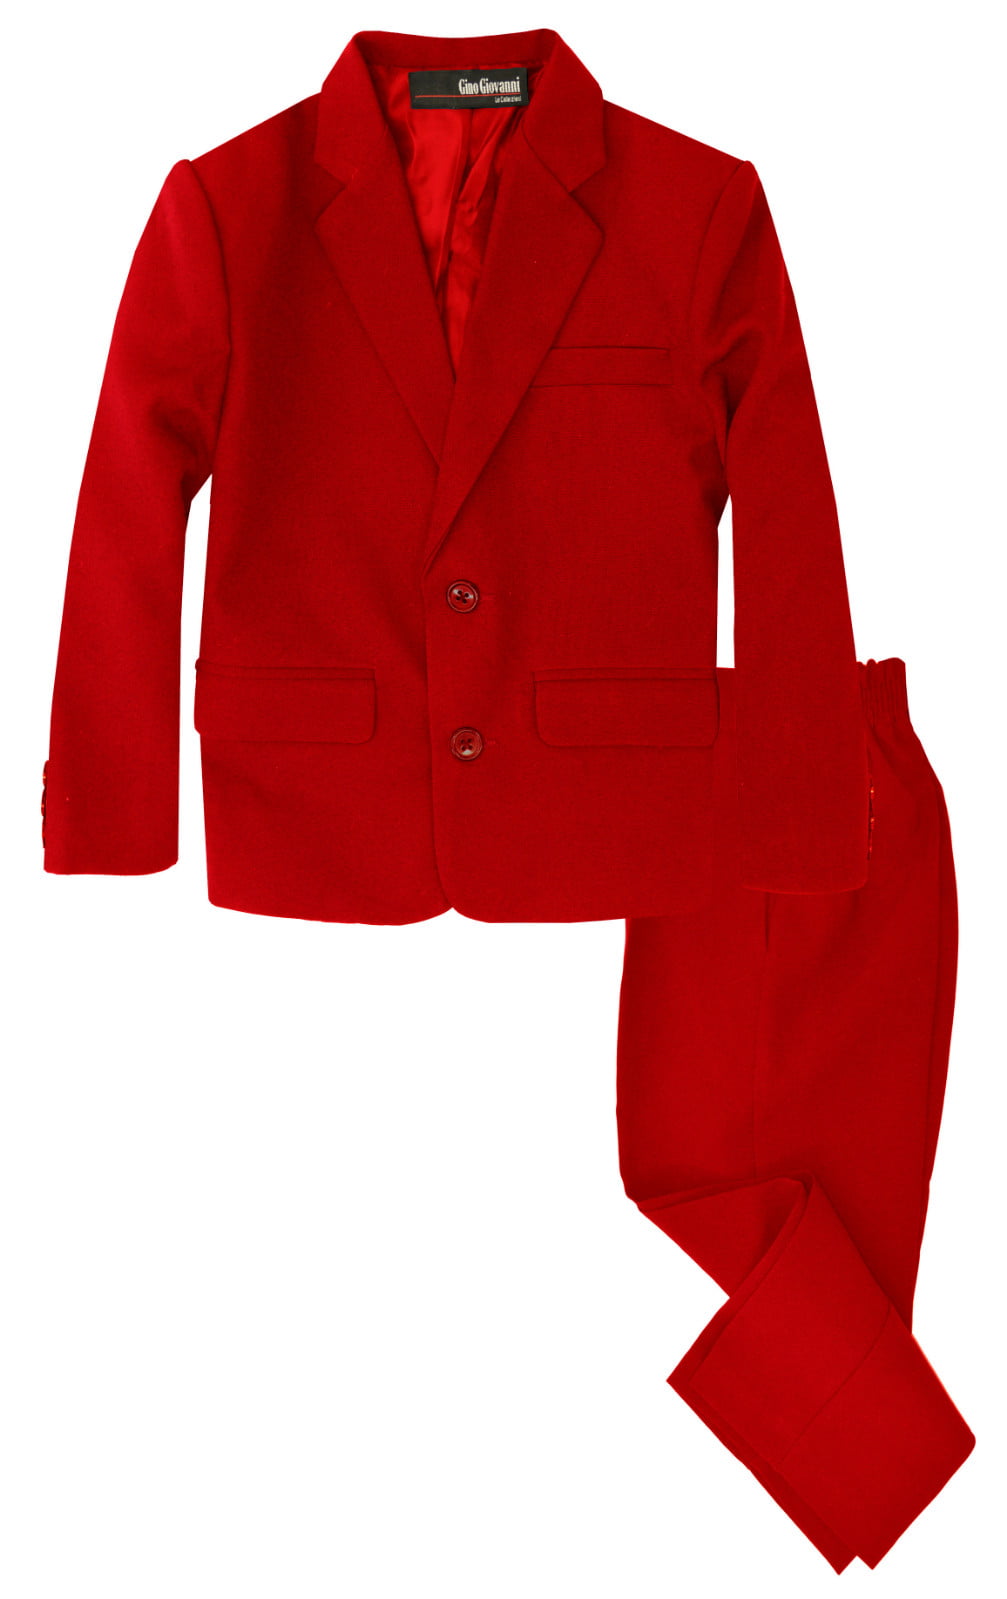 Gino Giovanni Boy's Formal Tuxedo Suit Dresswear Set 